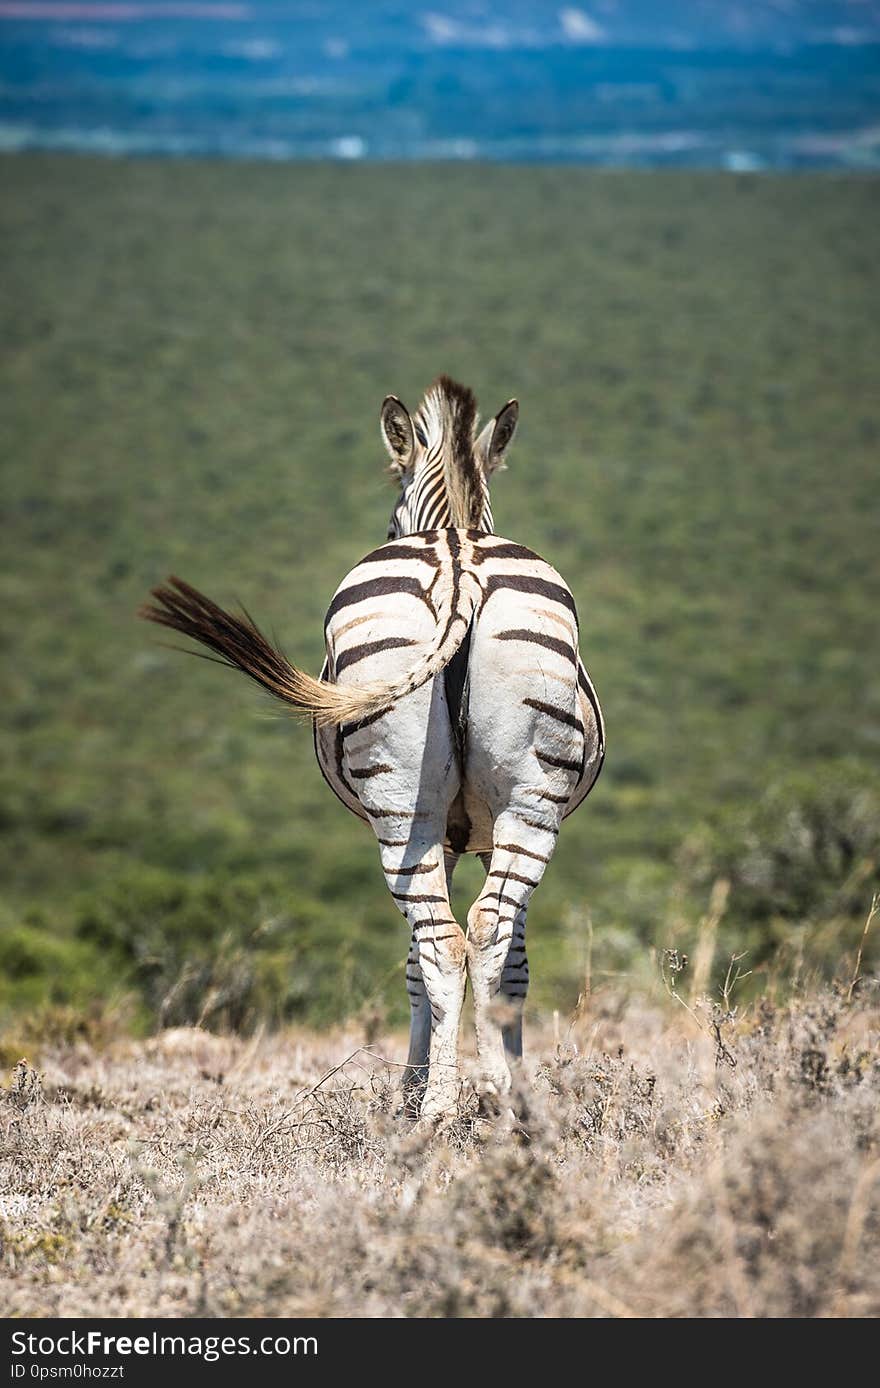 Zebra in Etosha national park, Namibia.